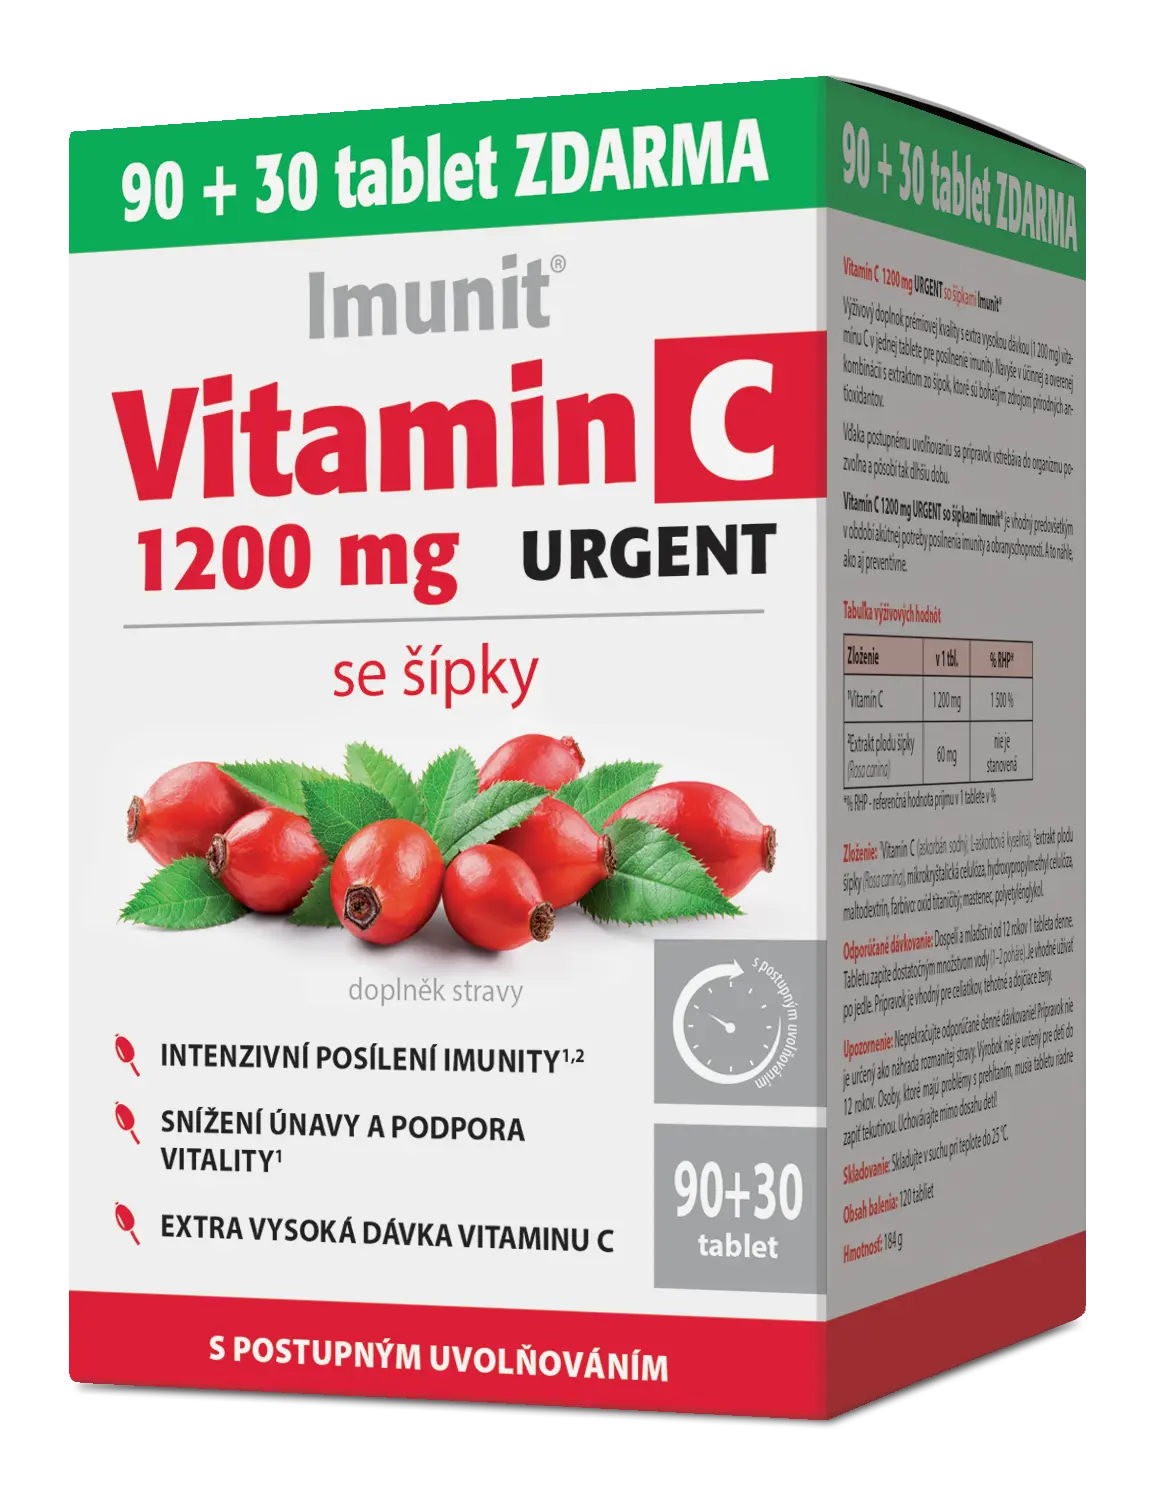 Vitamin C 1200 mg URGENT se šípky Imunit 90+30 tablet